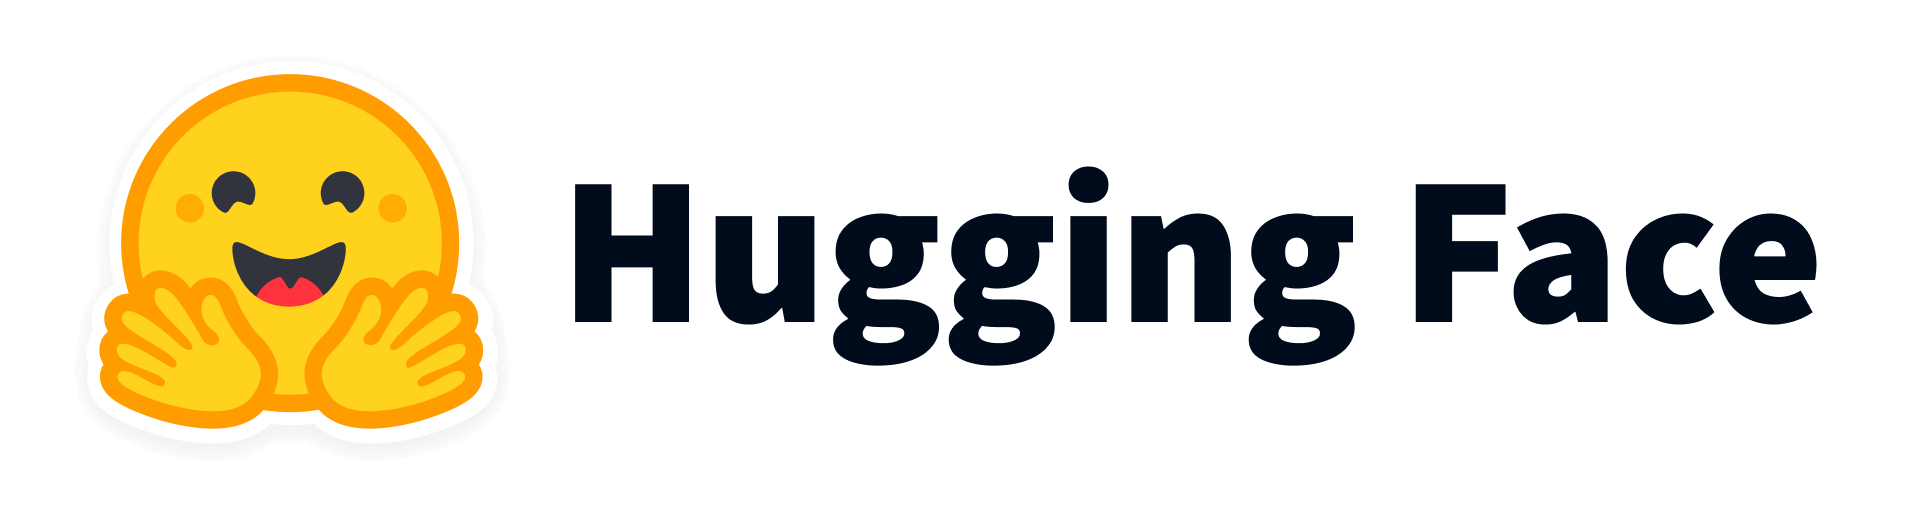 Hugging Face logo. language translation technology with less human involvement